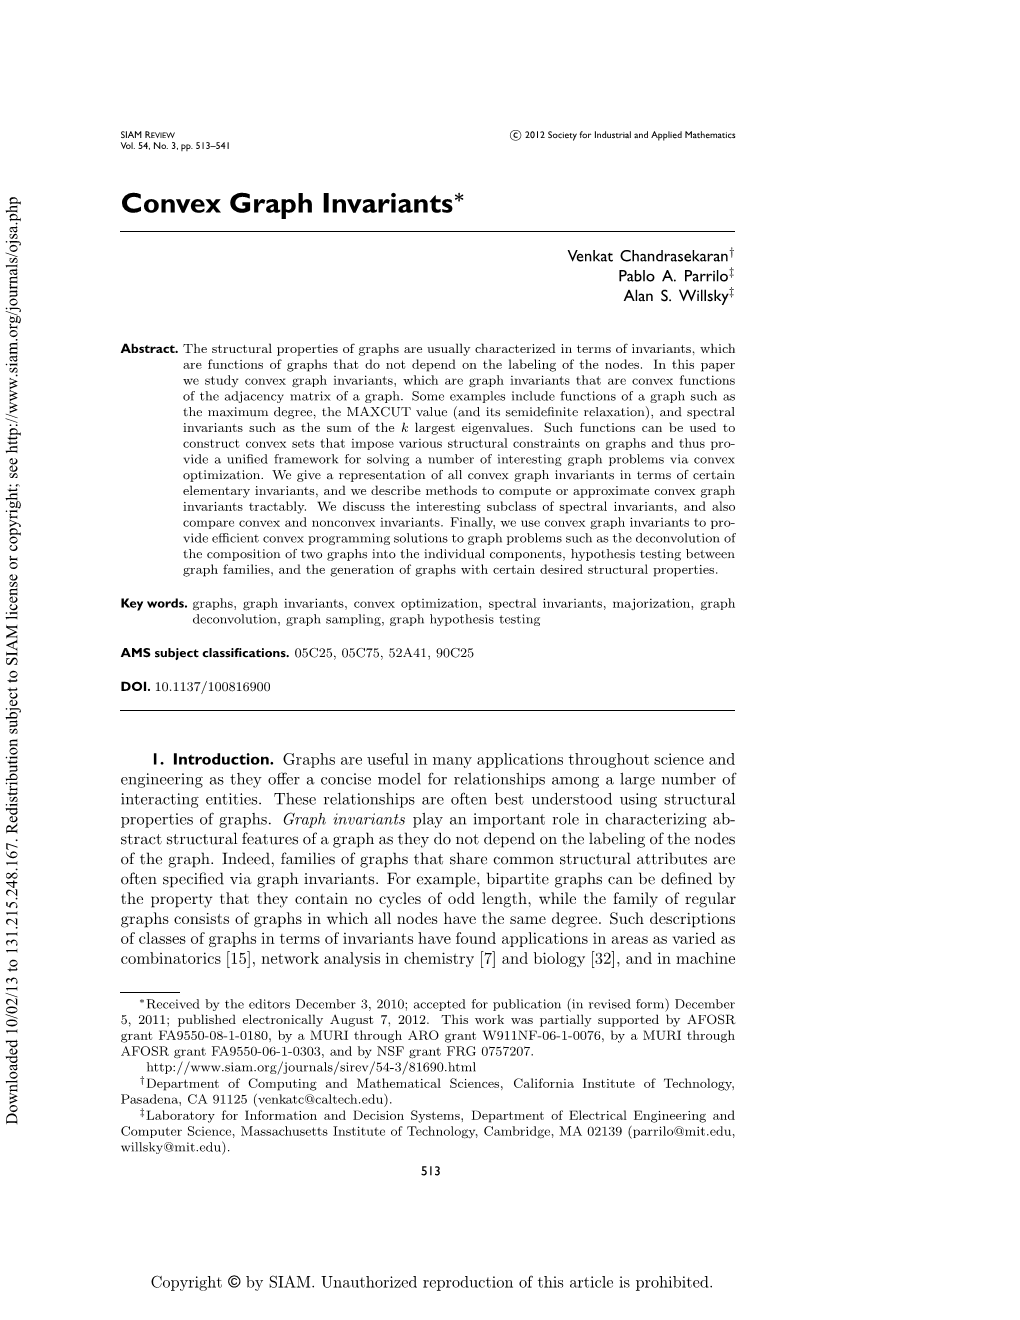 Convex Graph Invariants